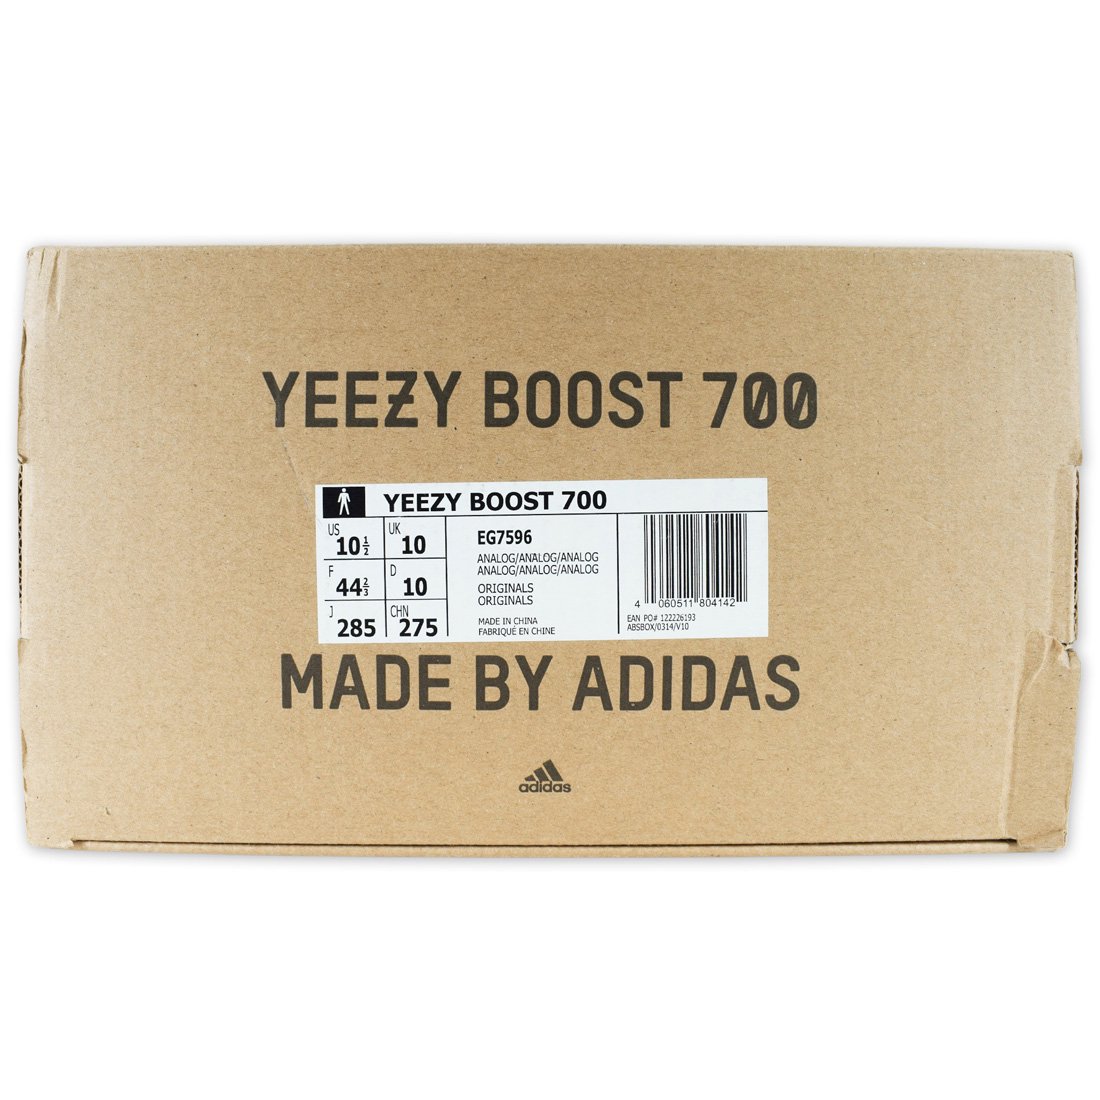 Yeezy boost 700 28.5